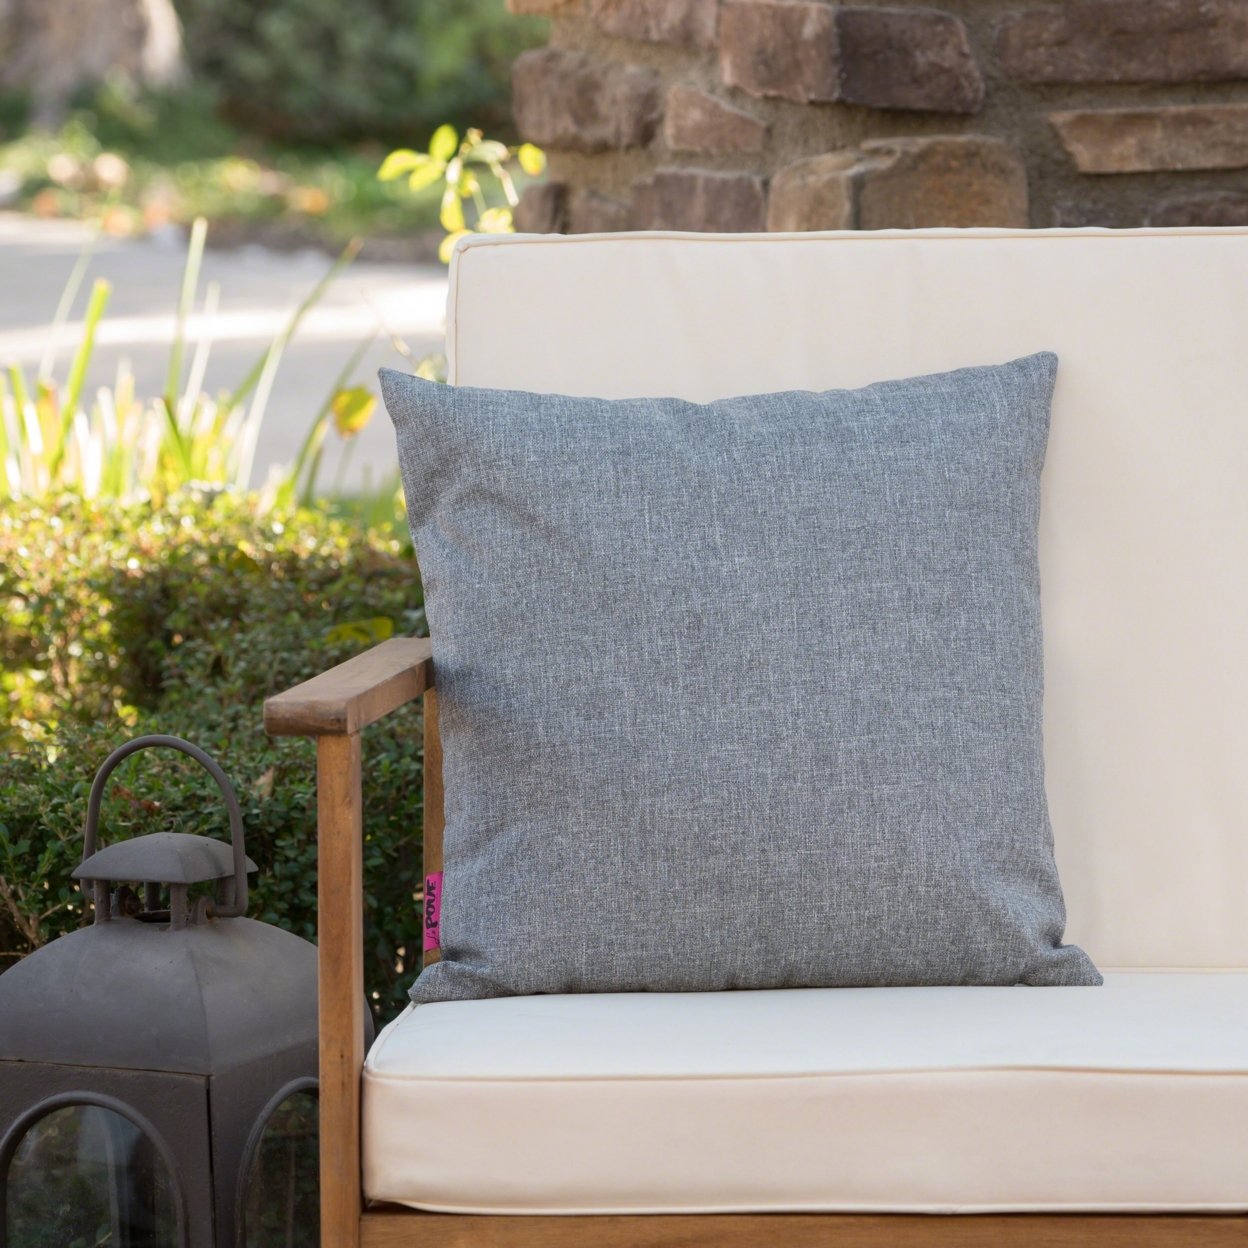 Coronado Outdoor Water Resistant Square Throw Pillow - Teal, Single